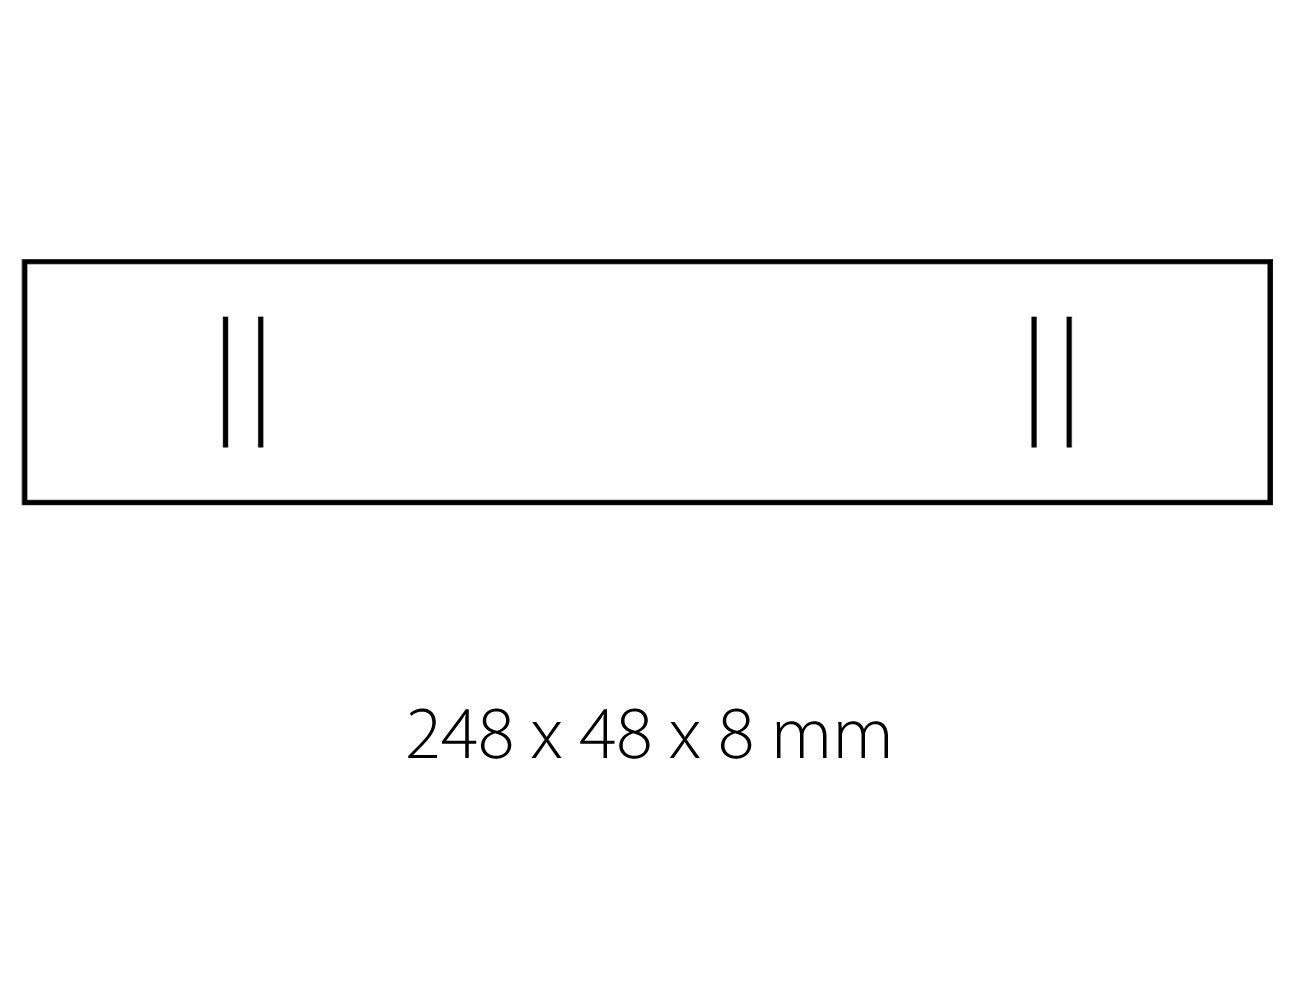 Whitebox Armband, 255 x 57 x 30 mm